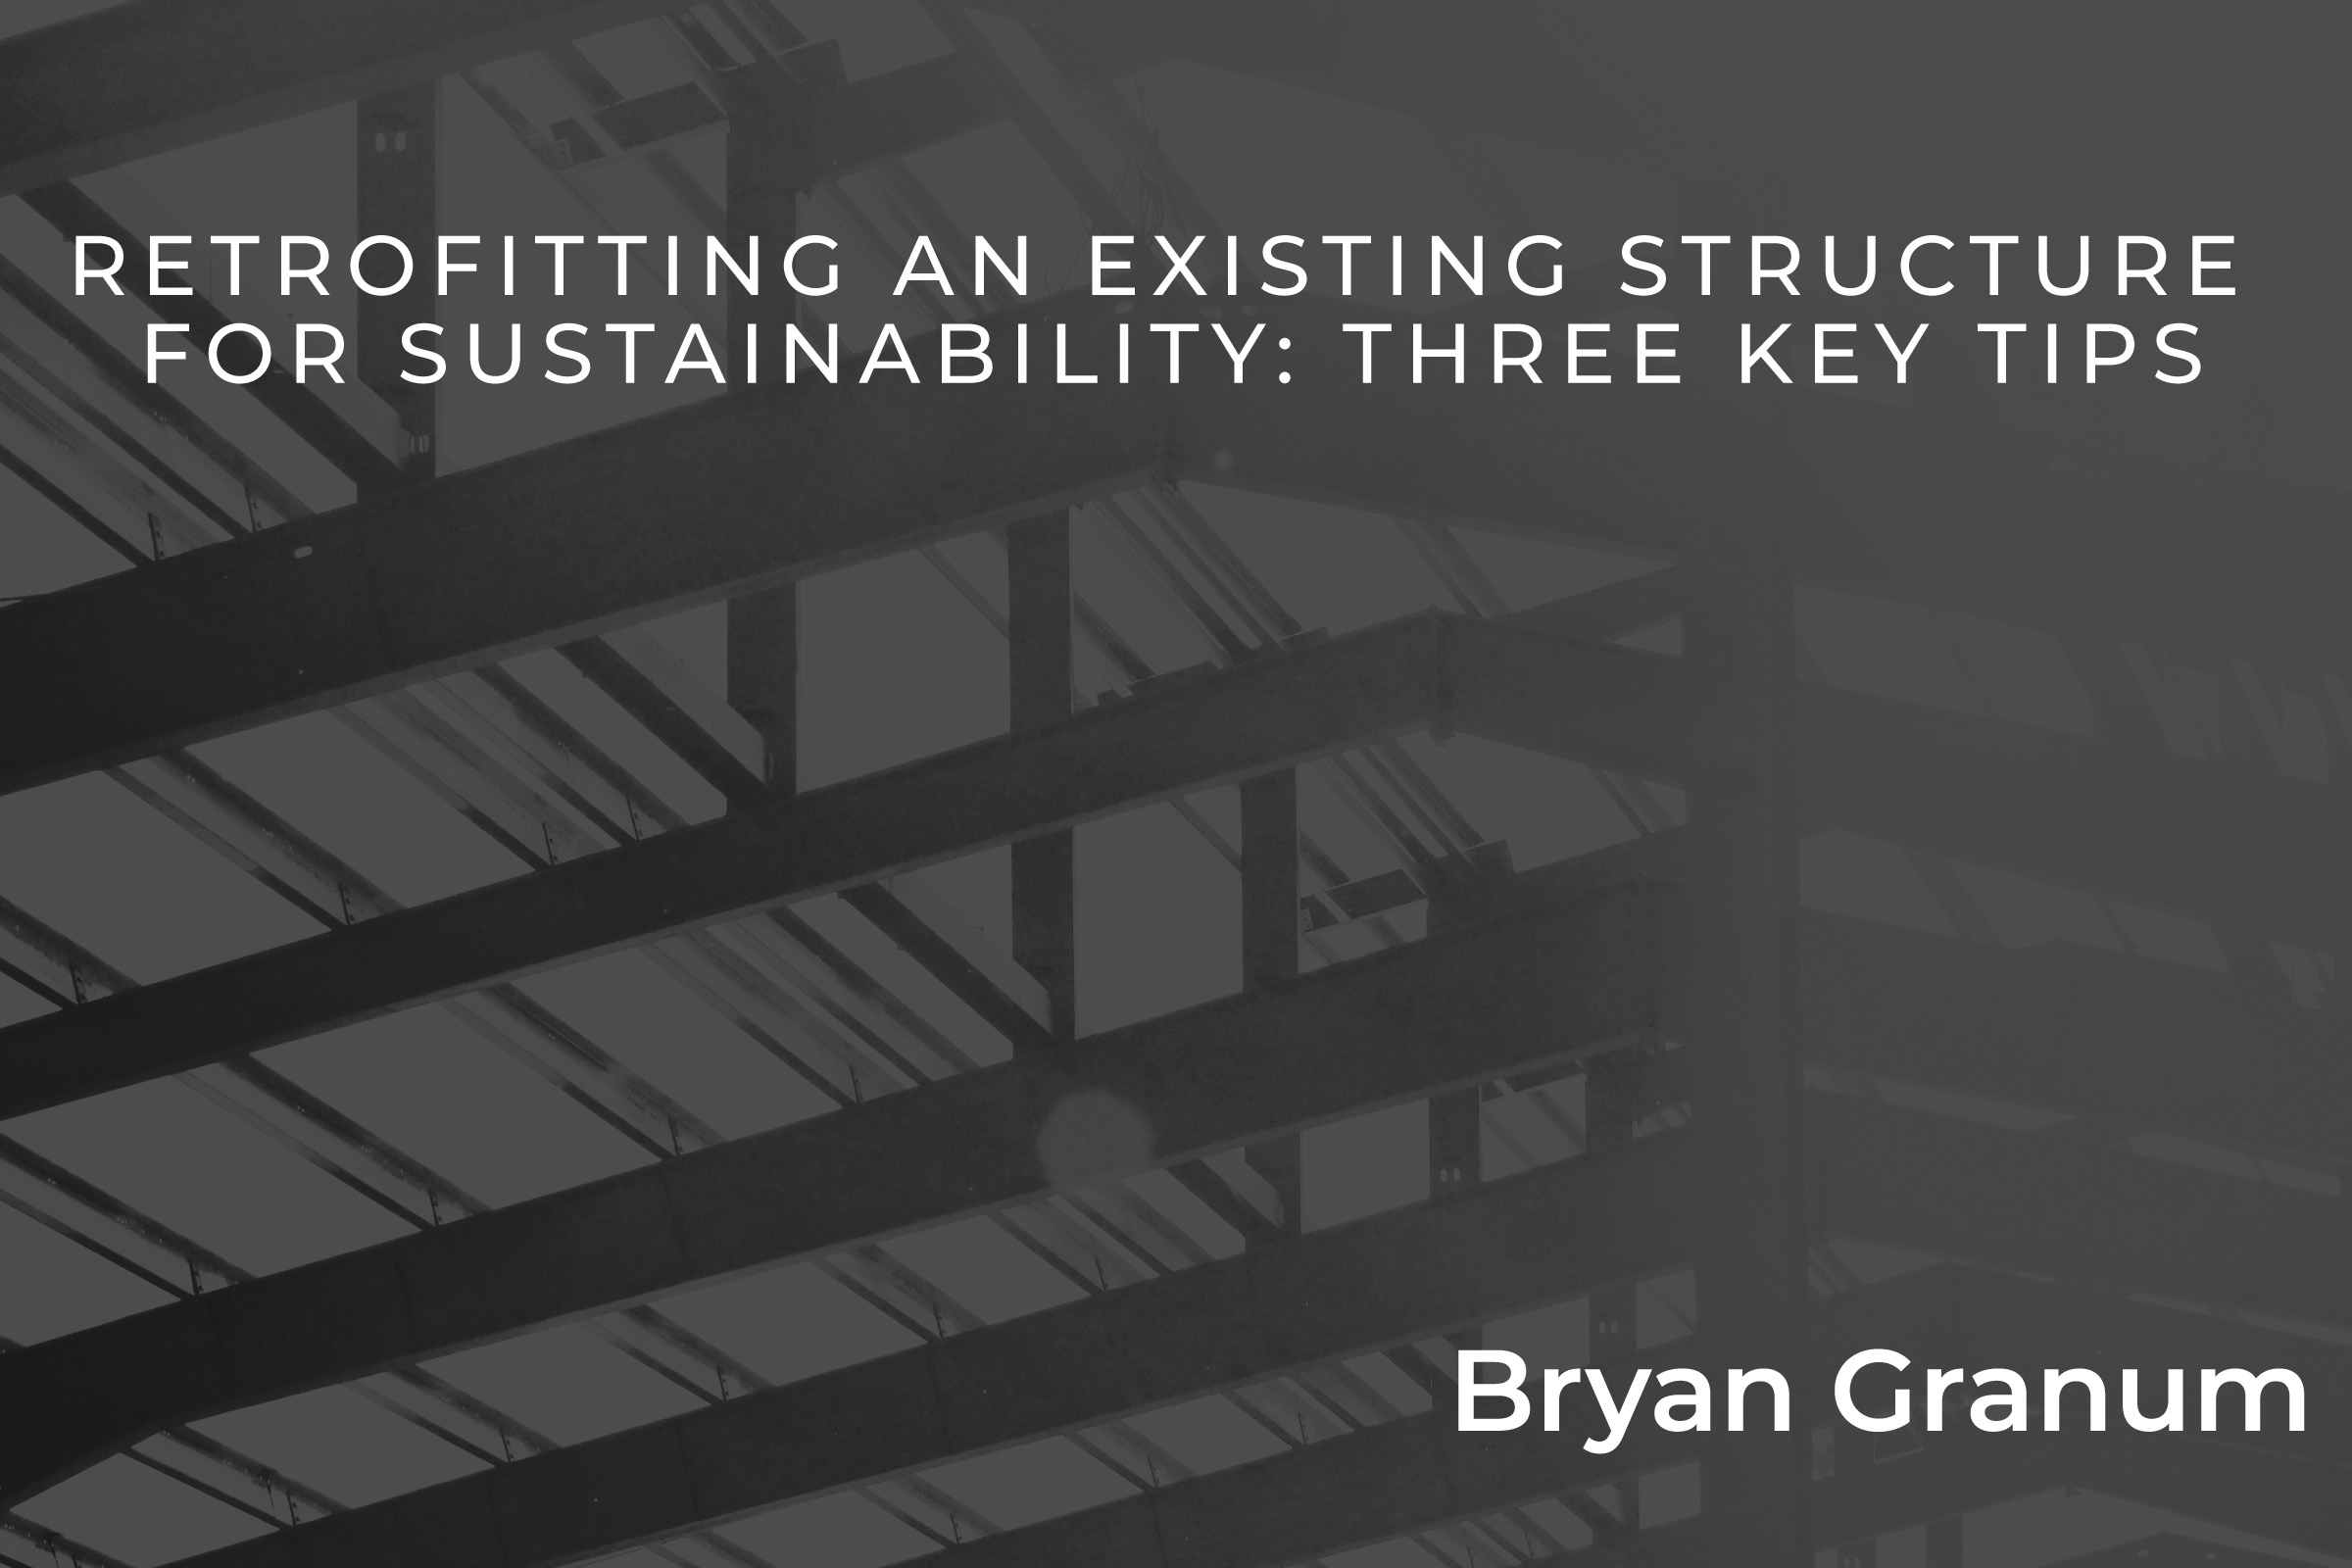 Bryan-Granum-retrofitting